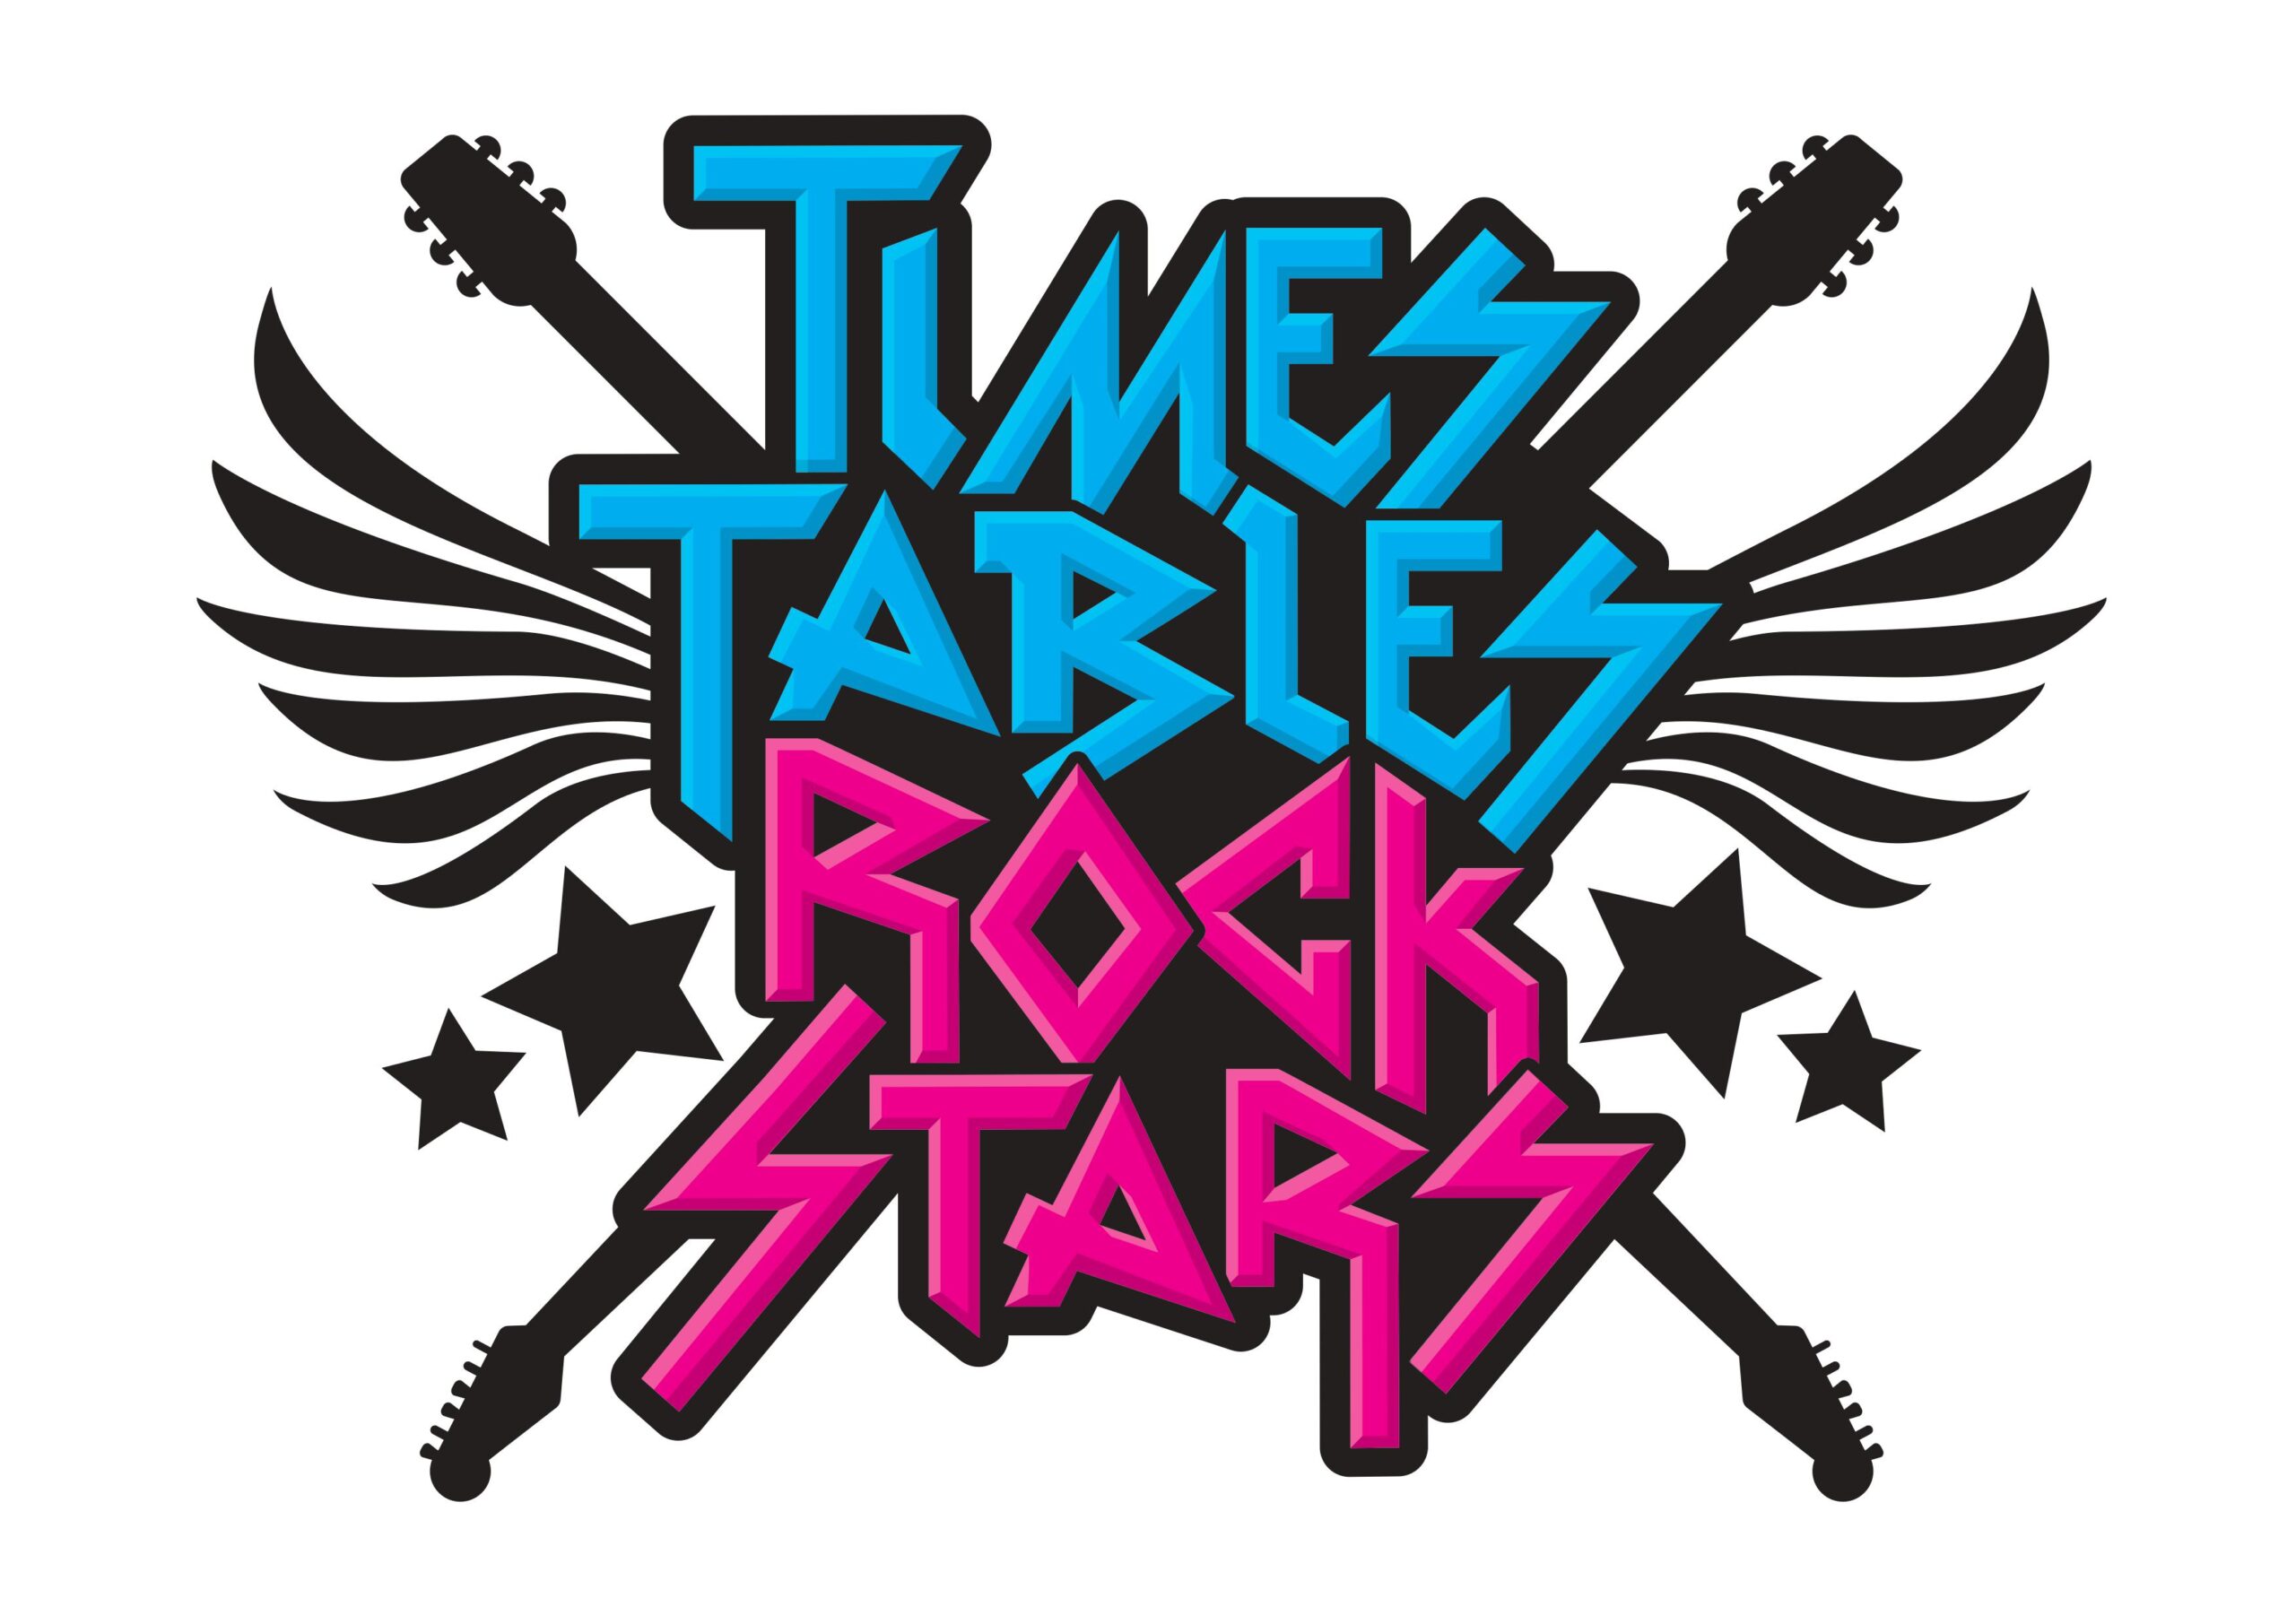 LOGO Times Table Rockstars scaled